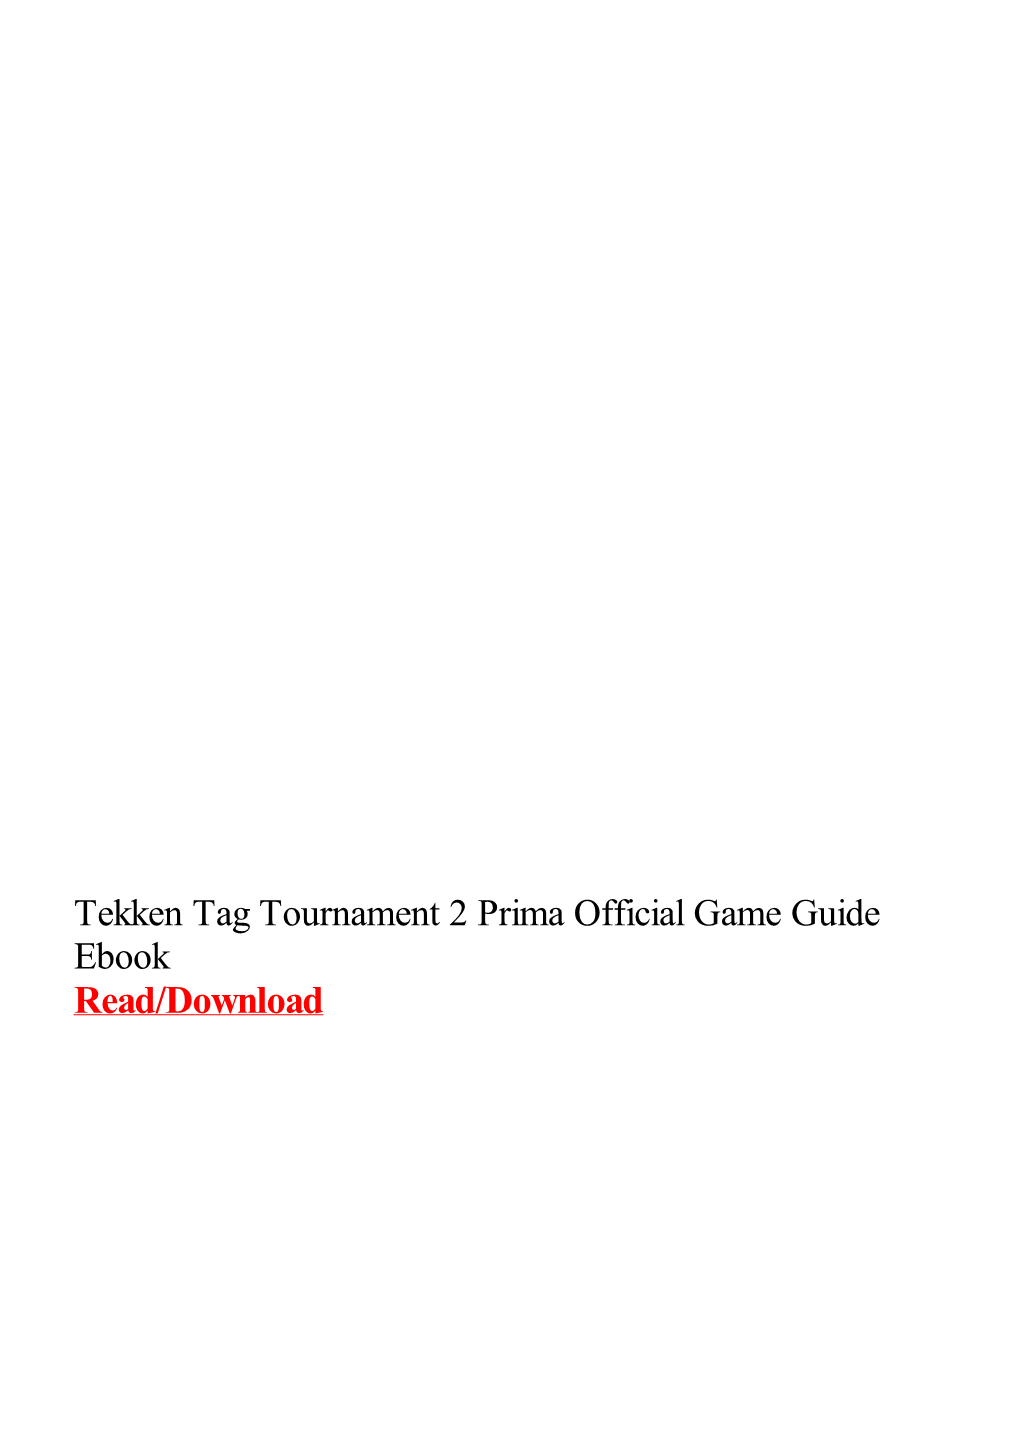 Tekken Tag Tournament 2 Prima Official Game Guide Ebook.Pdf